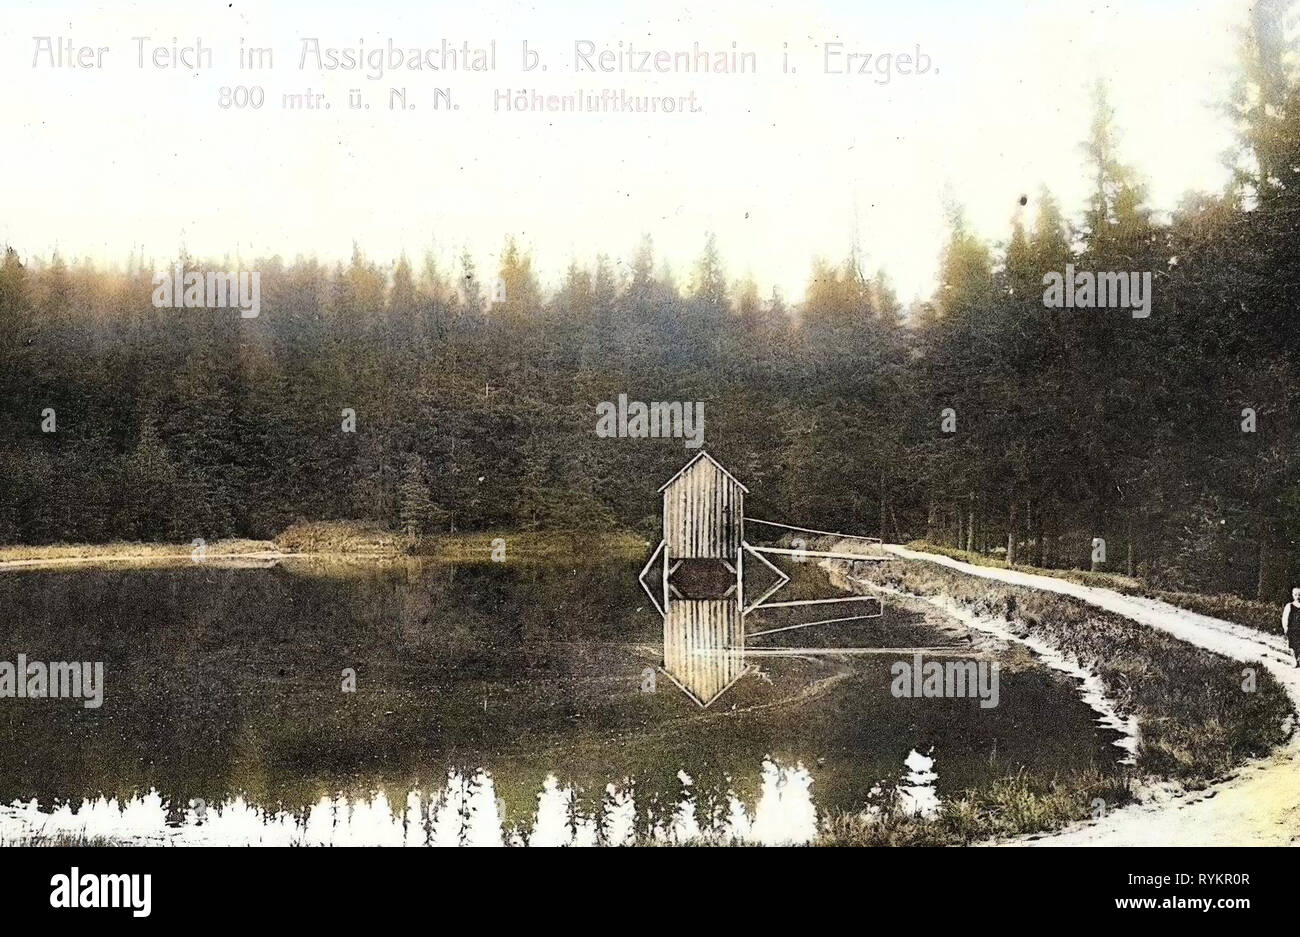 Stagni in Erzgebirgskreis, edifici in Erzgebirgskreis, acqua riflessioni in Sassonia, Reitzenhain (Marienberg), 1913, Erzgebirgskreis, Reitzenhain, Alter Teich im Assigbachtal, Germania Foto Stock